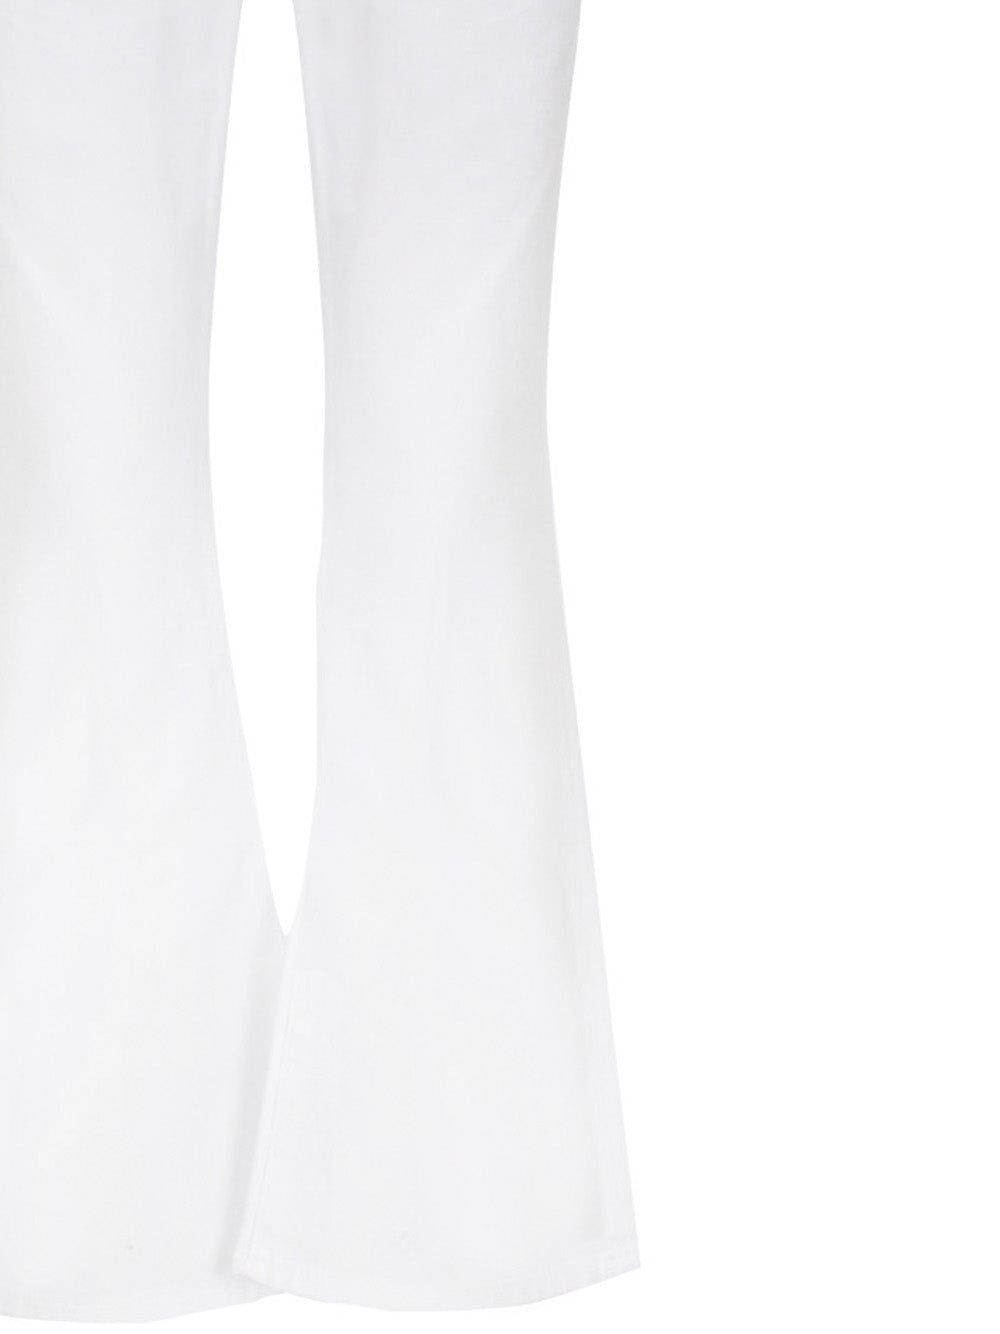 Versace 1014103 Woman White Jeans - Zuklat